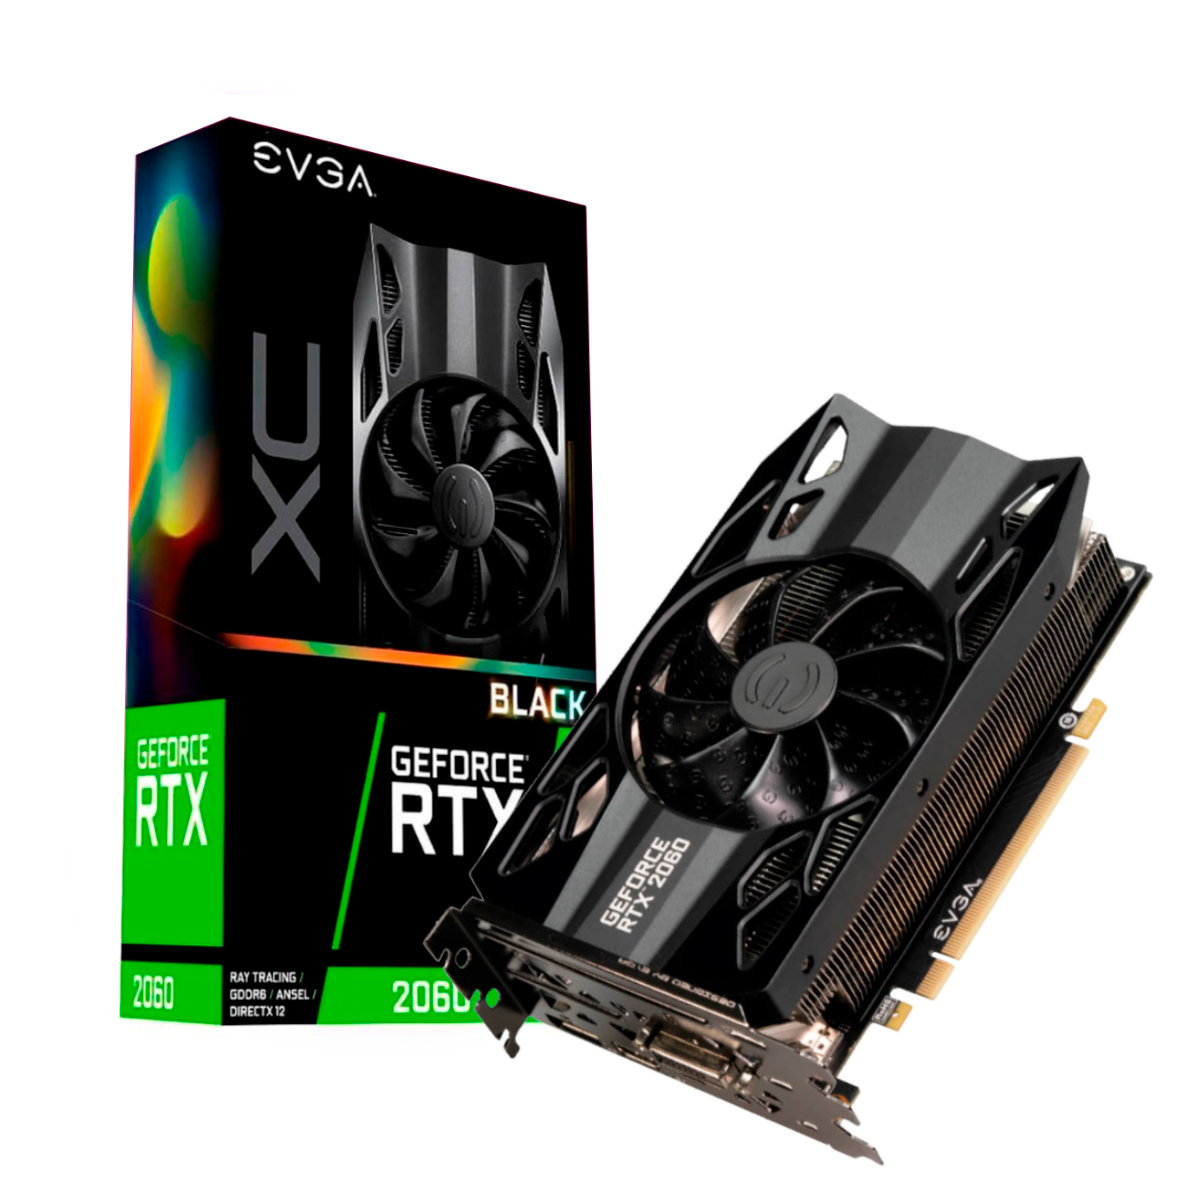 GeForce RTX 2060 XC 6GB GDDR6 192bits - Black Gaming - EVGA 06G-P4-2061-KR